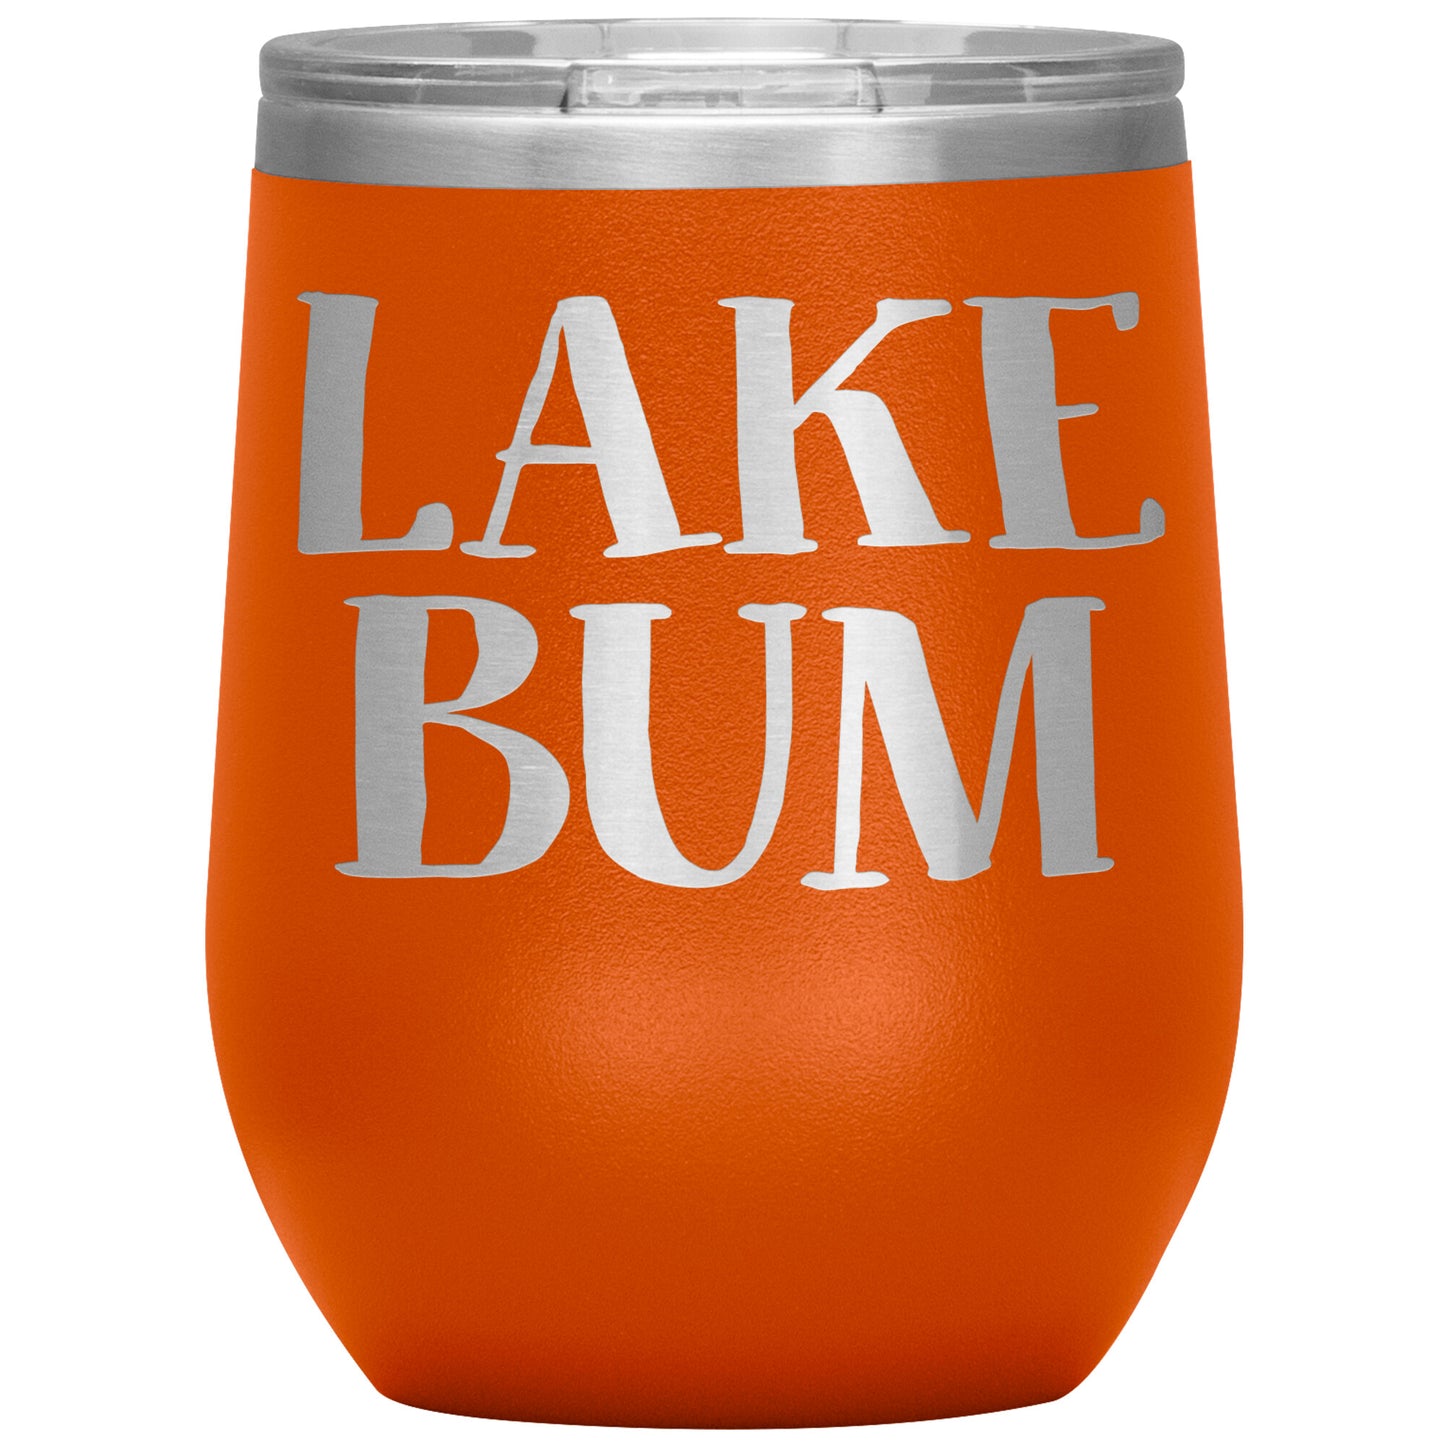 Lake Bum 12oz Wine Tumbler - Funny Stemless Cup